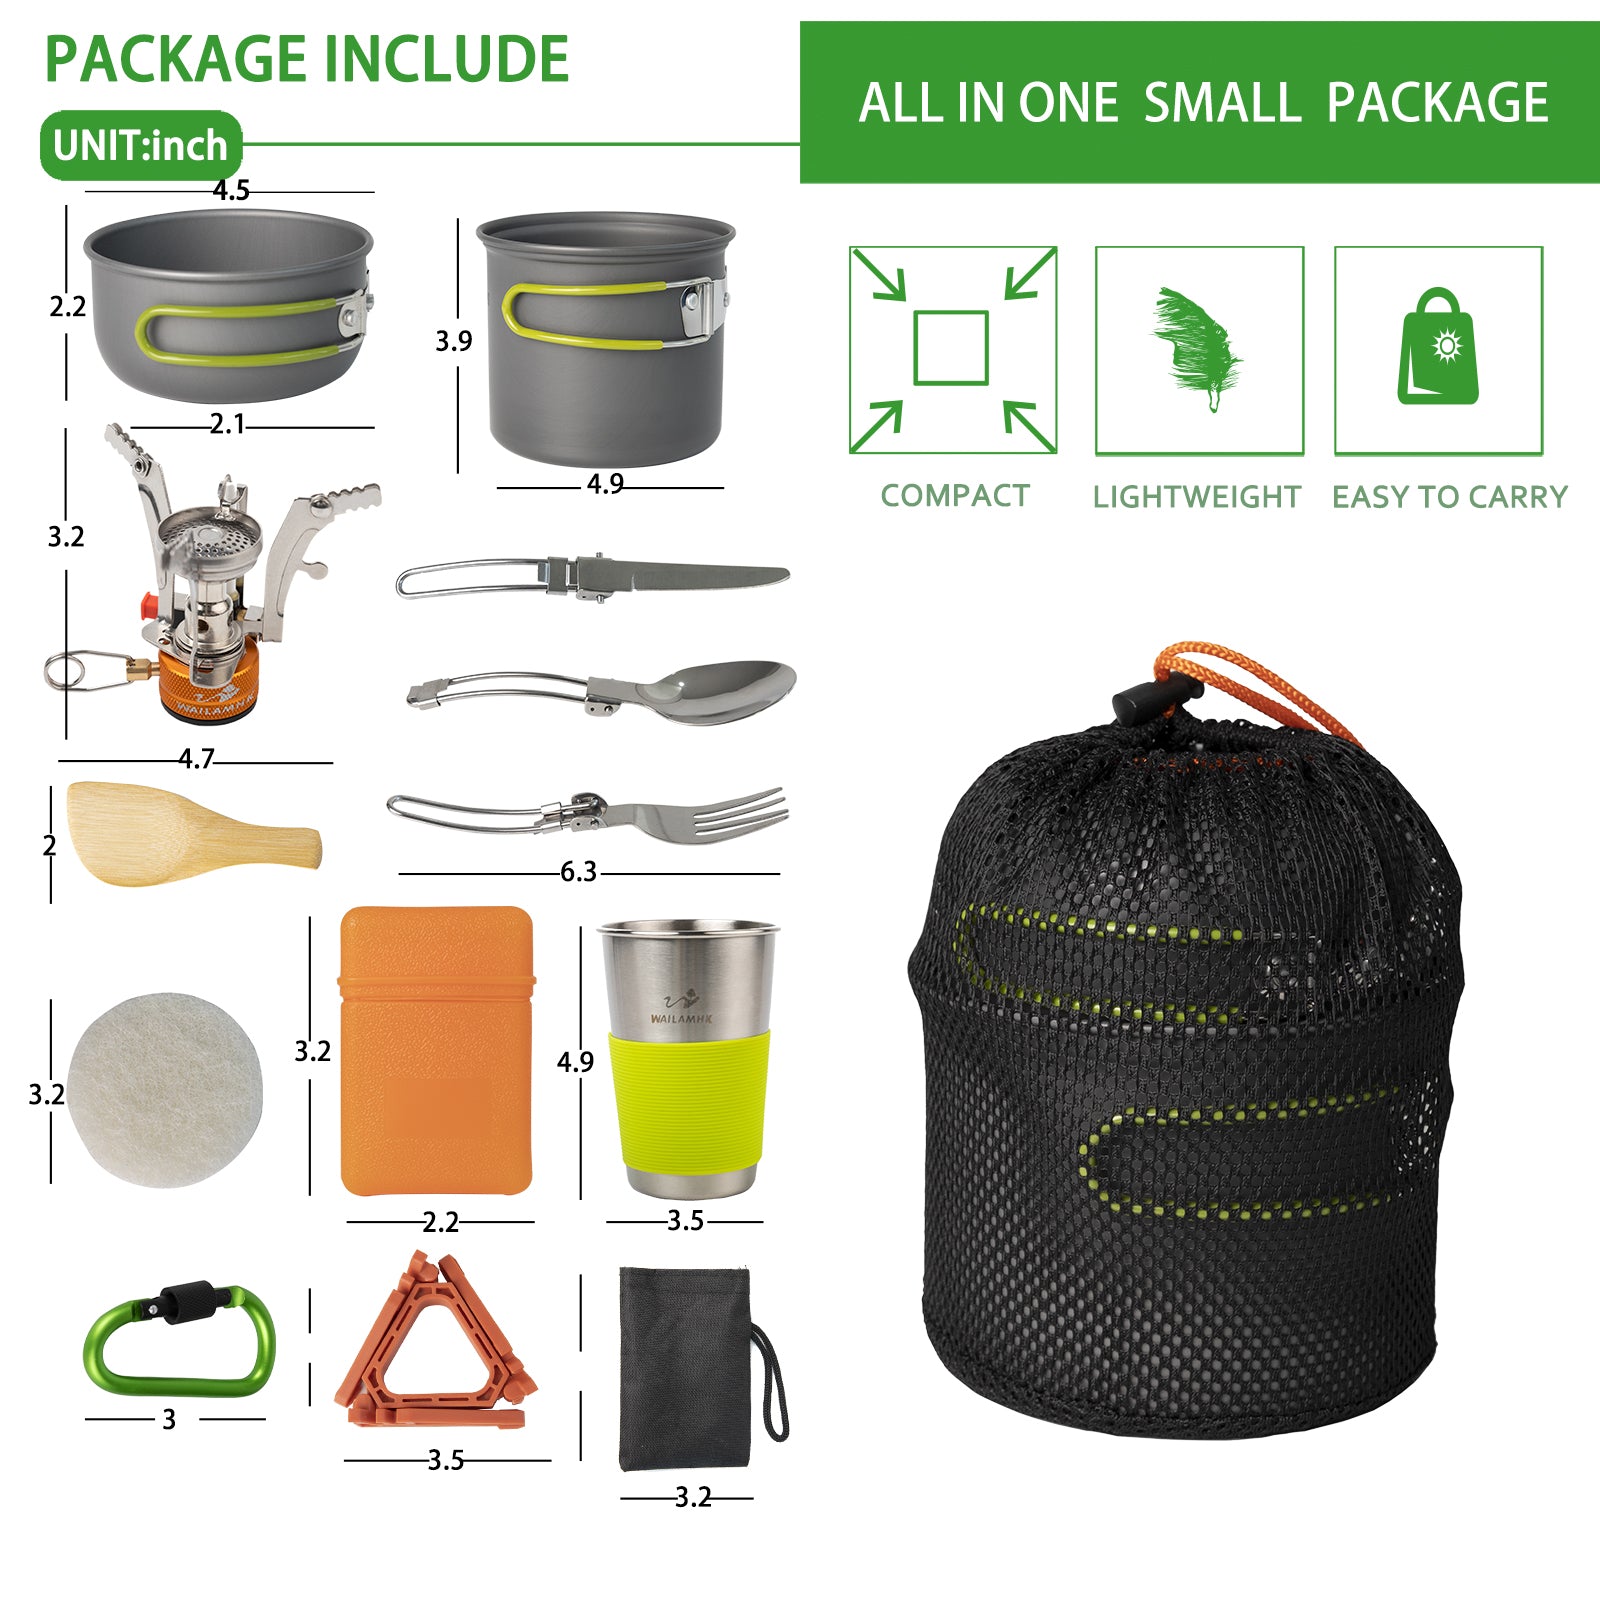 WAILAMHK Camping Cookware Pot Set with Mini Backpacking Stove